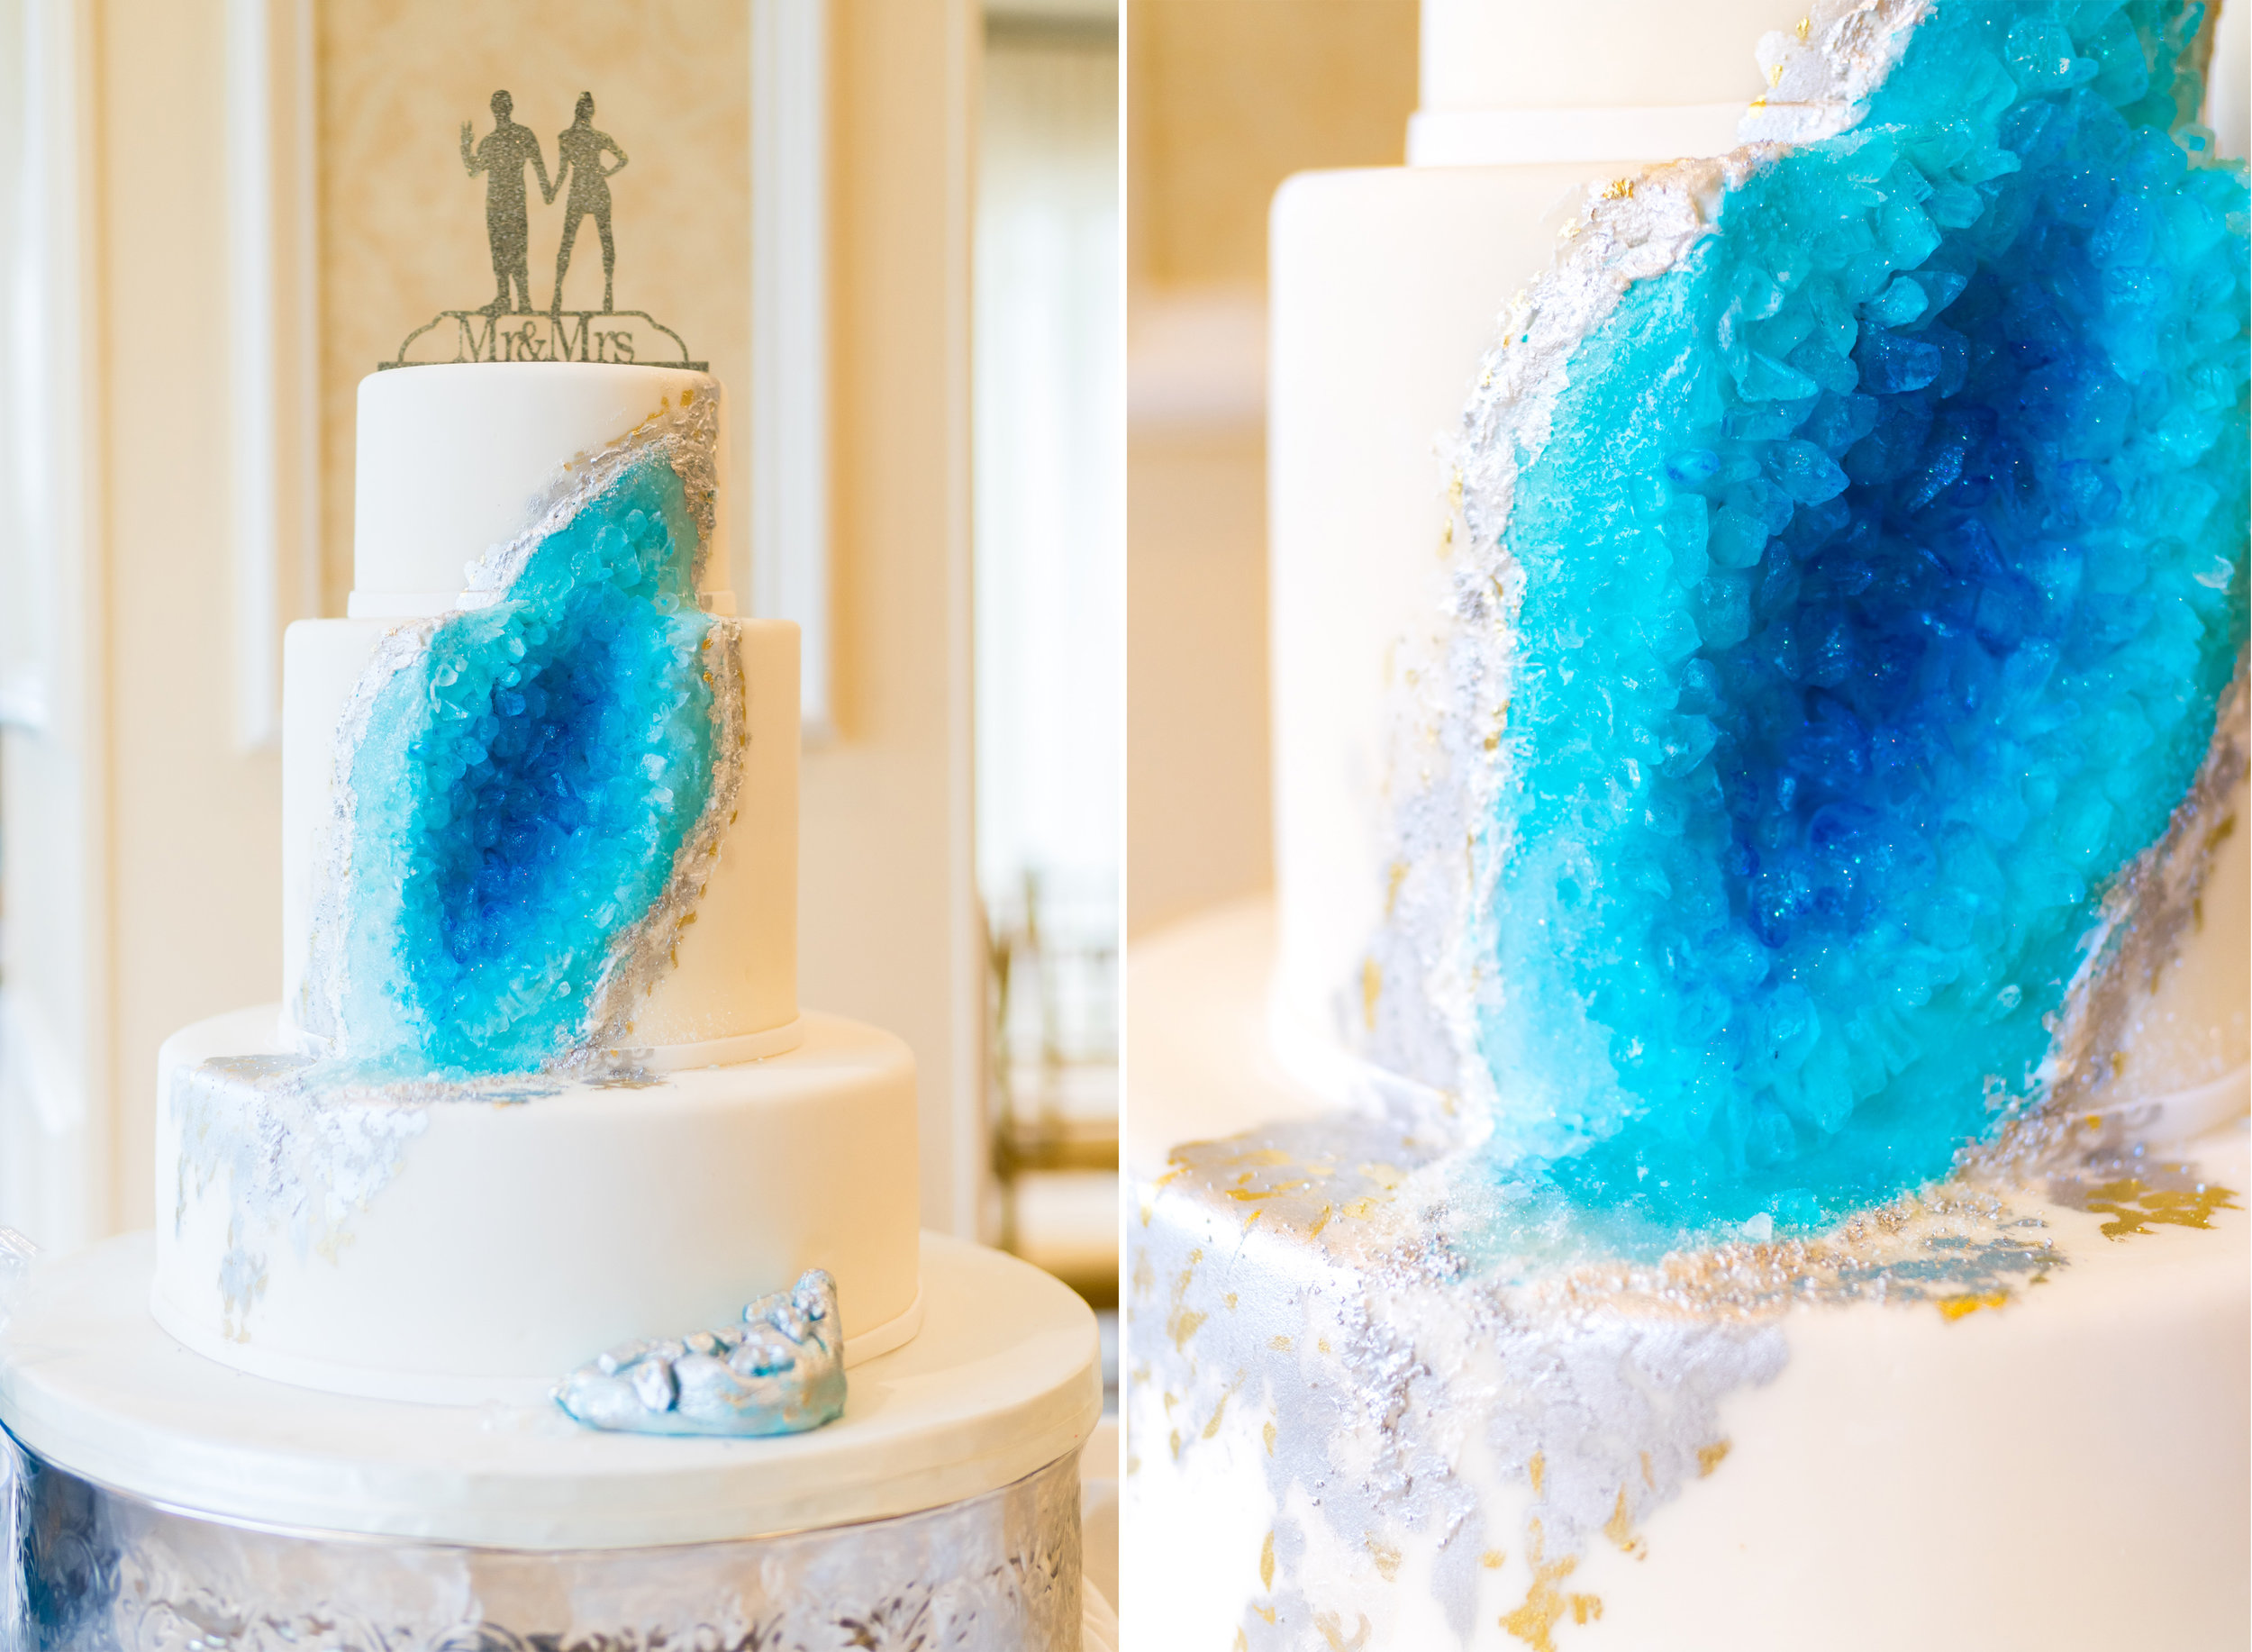 Amazing blue rock geode cake at a rockville wedding venue